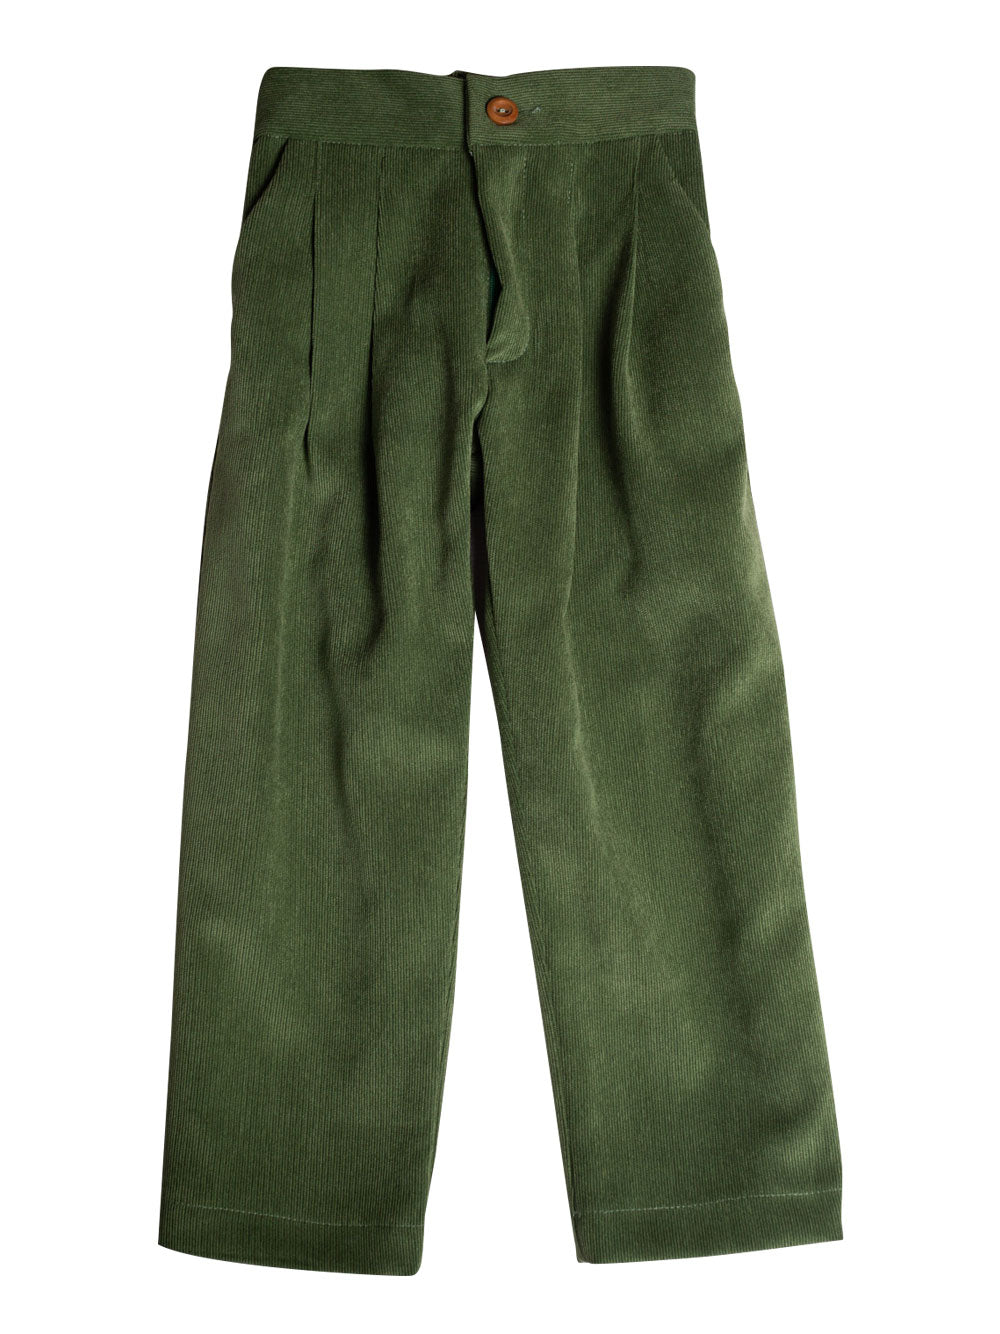 Olive Corduroy Pants